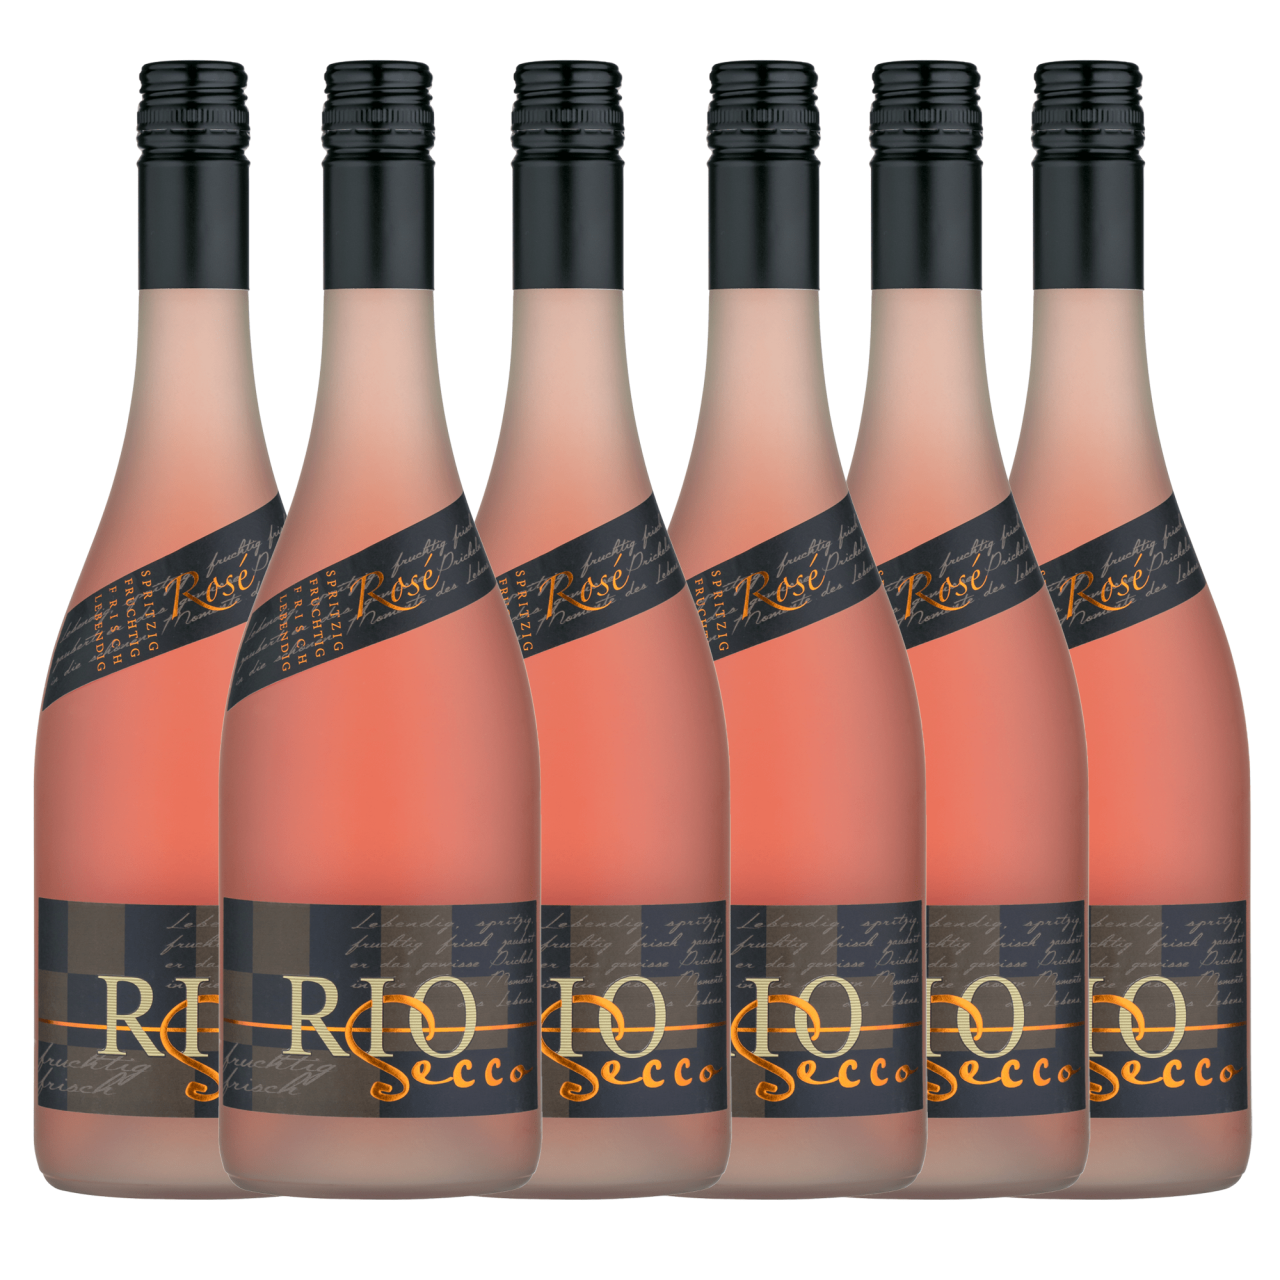 Bottwartaler Rio Secco Deutscher Perlwein Rosé 0,75 Ltr. 6er Karton Württembergische WZG Norma24 DE